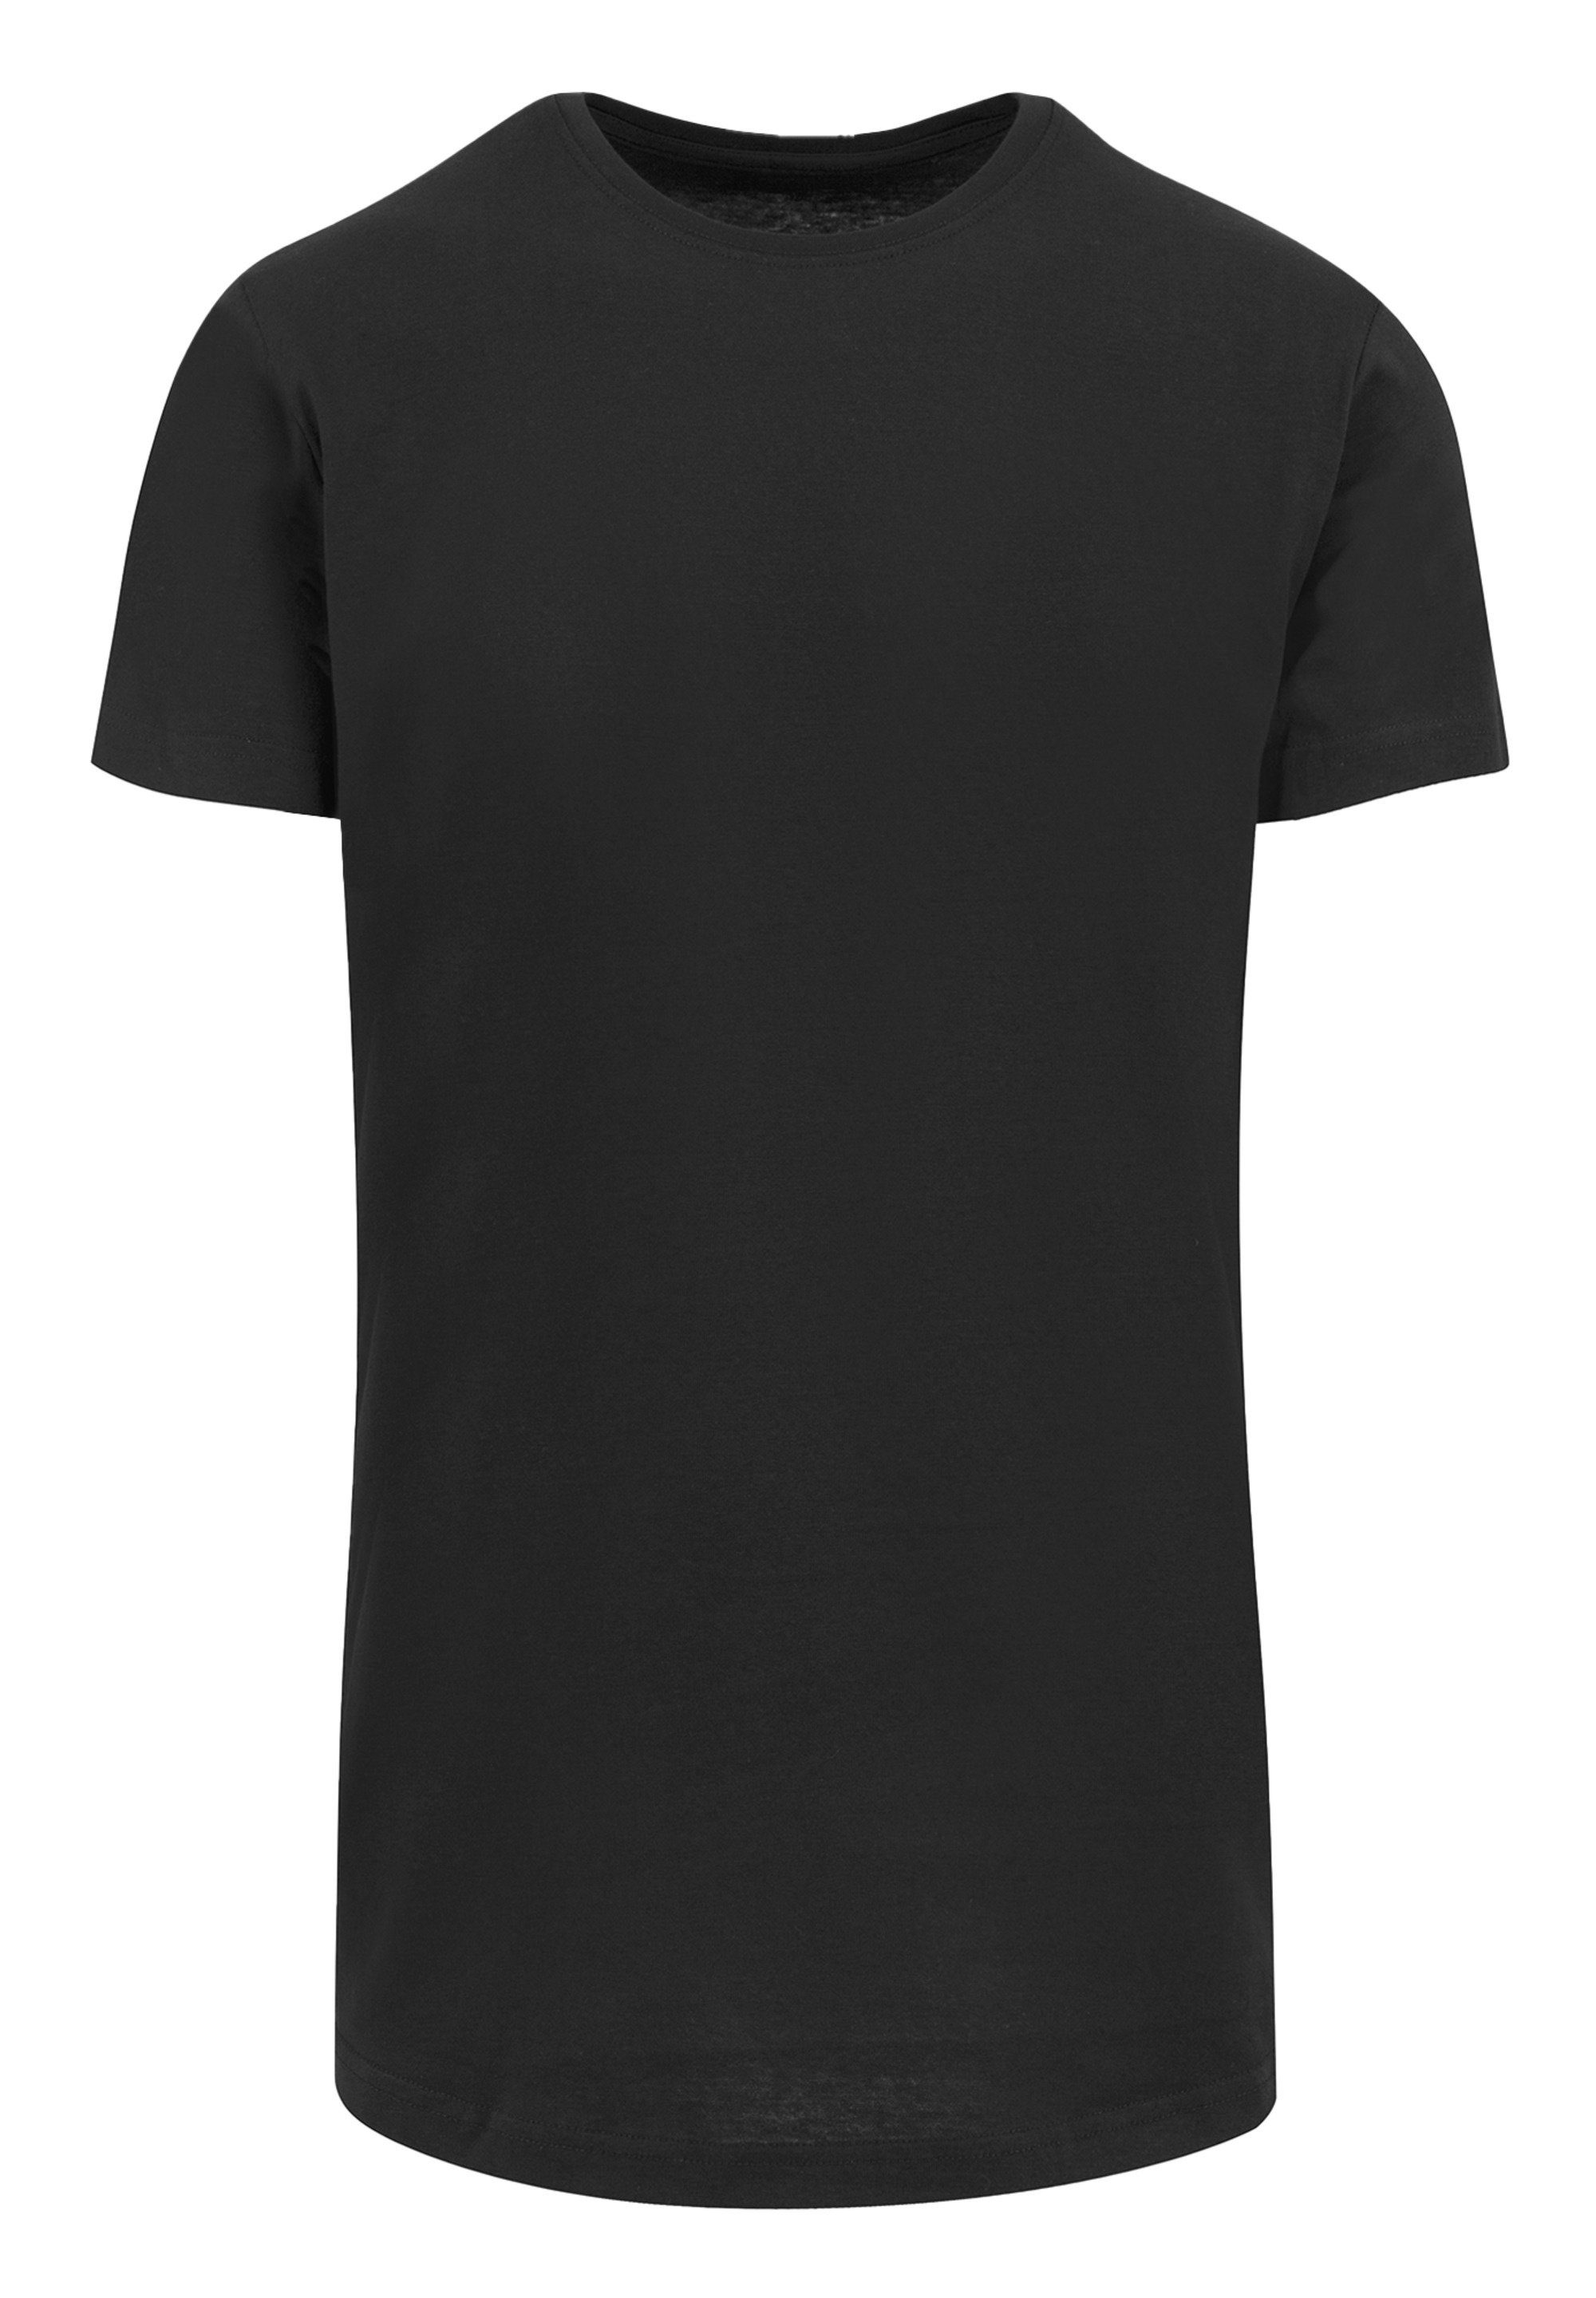 F4NT4STIC T-Shirt Geometrics Abstract Print schwarz